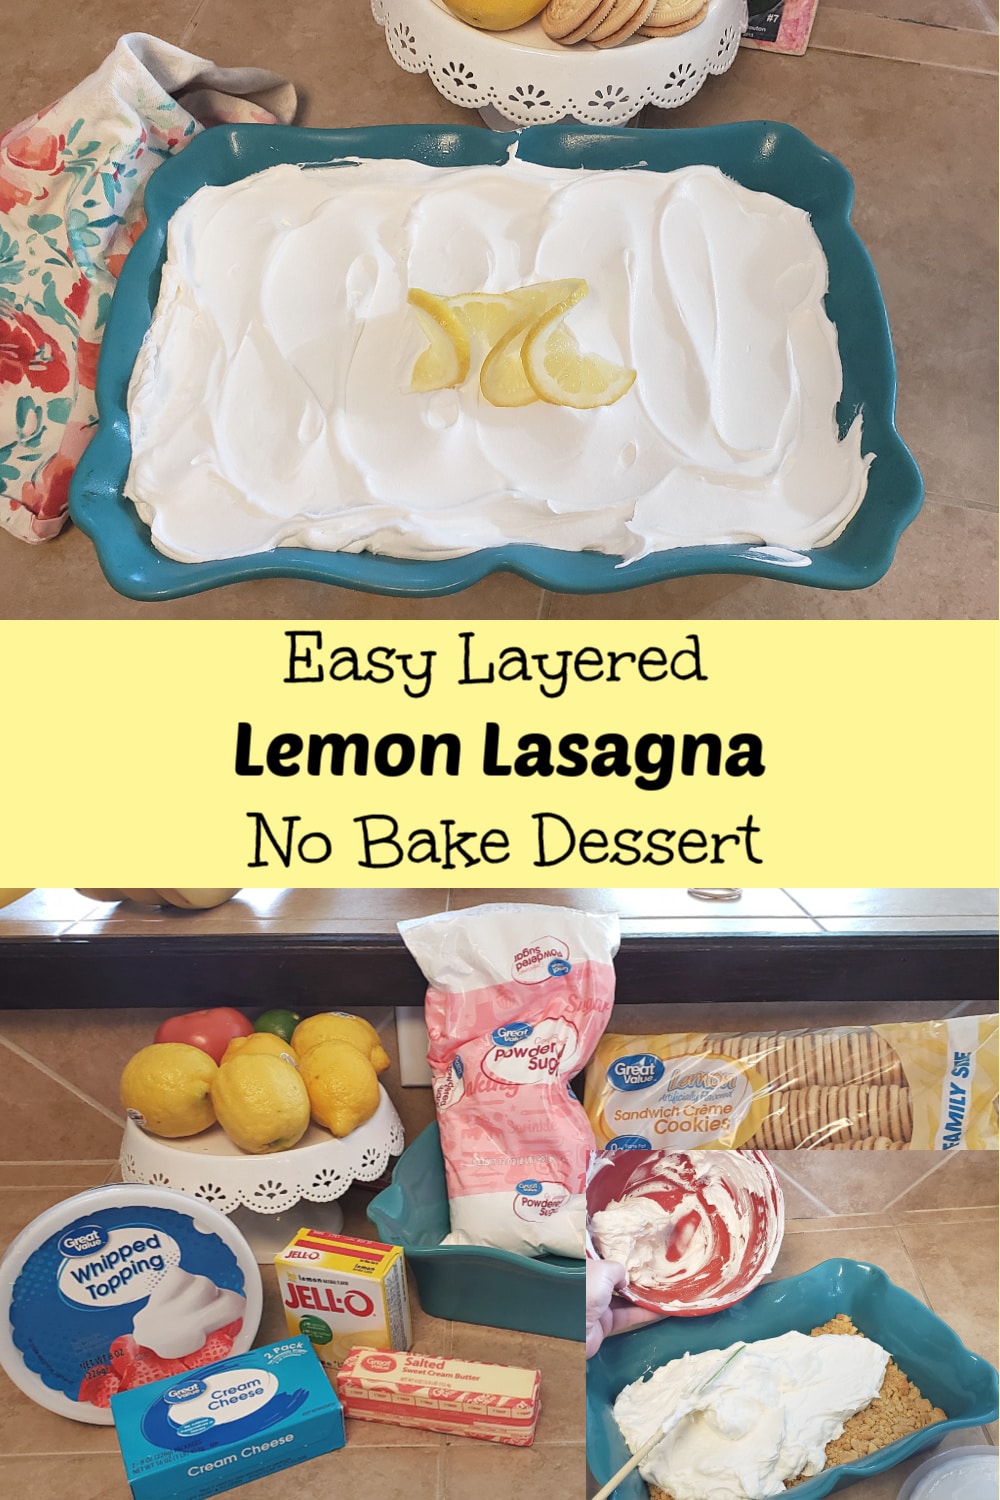 Easy Layered Lemon Lasagna No Bake Dessert